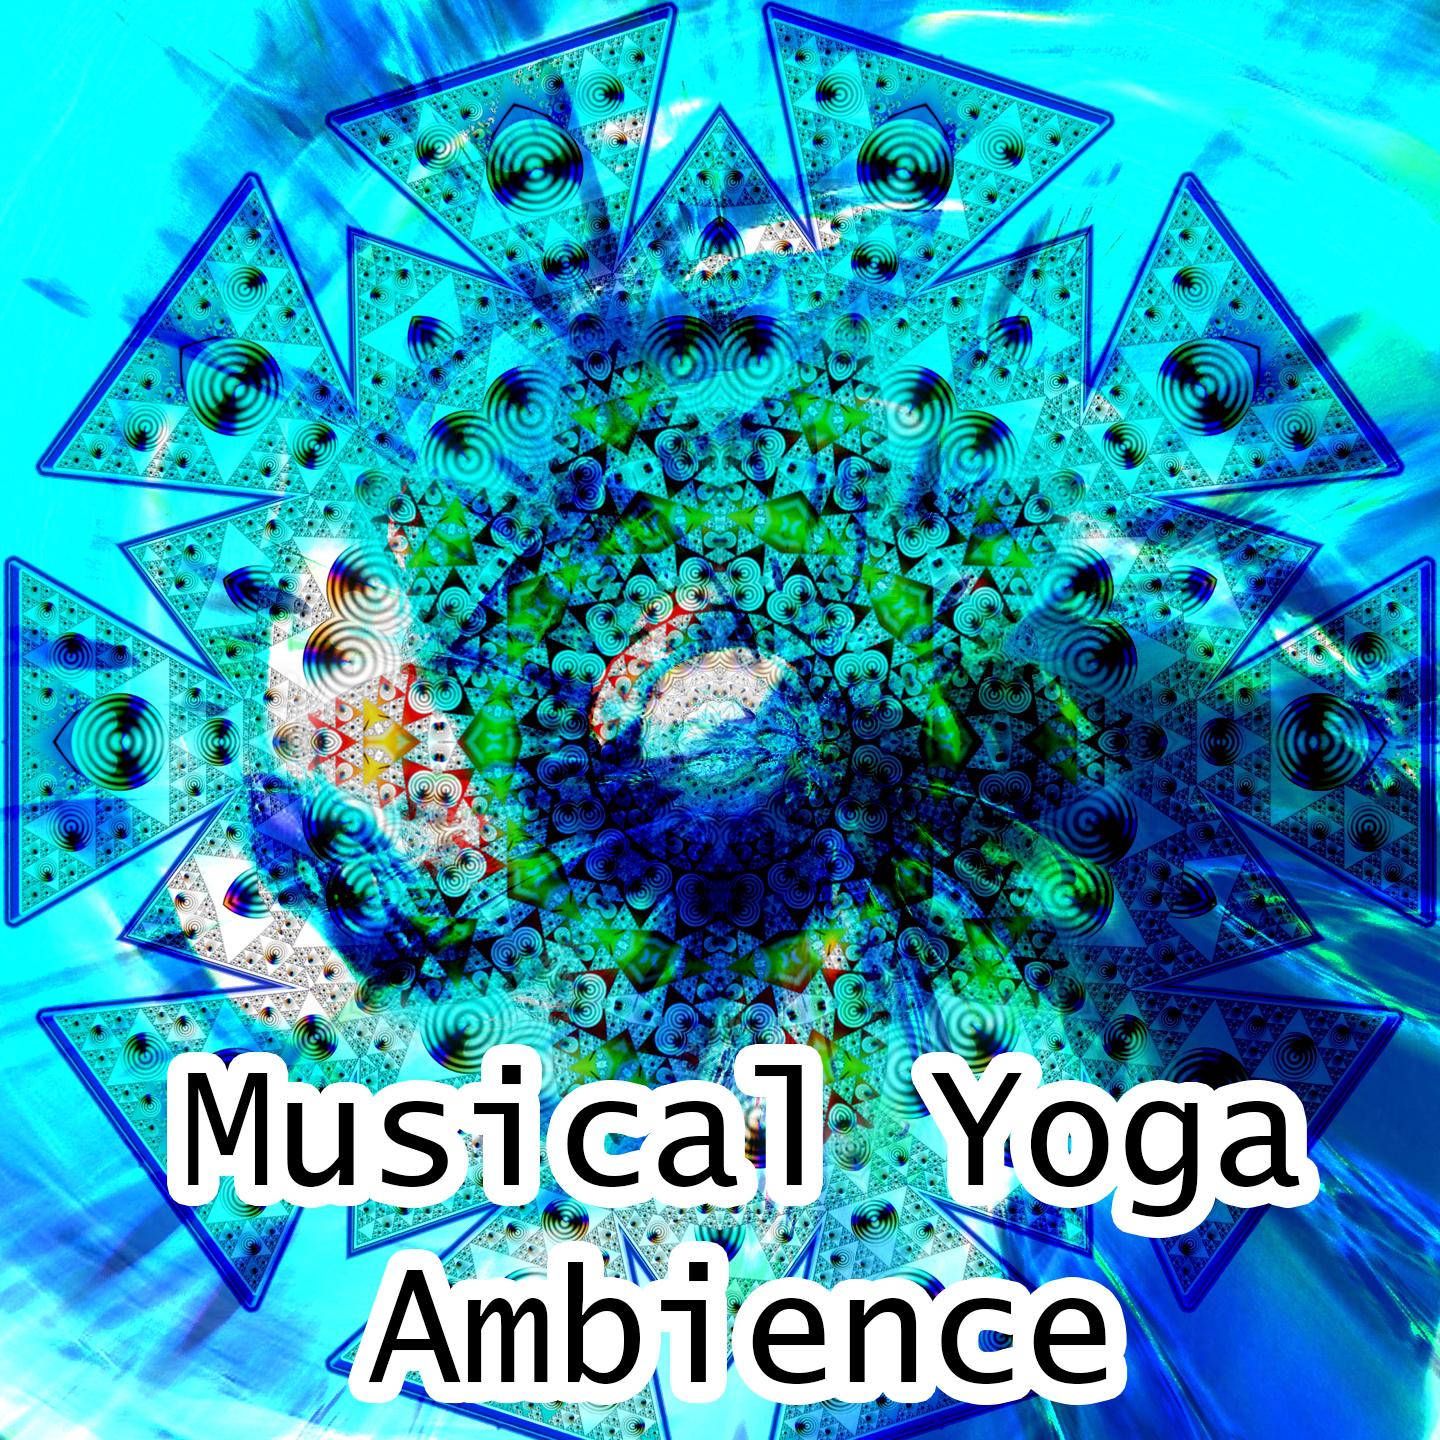 Musical Yoga Ambience